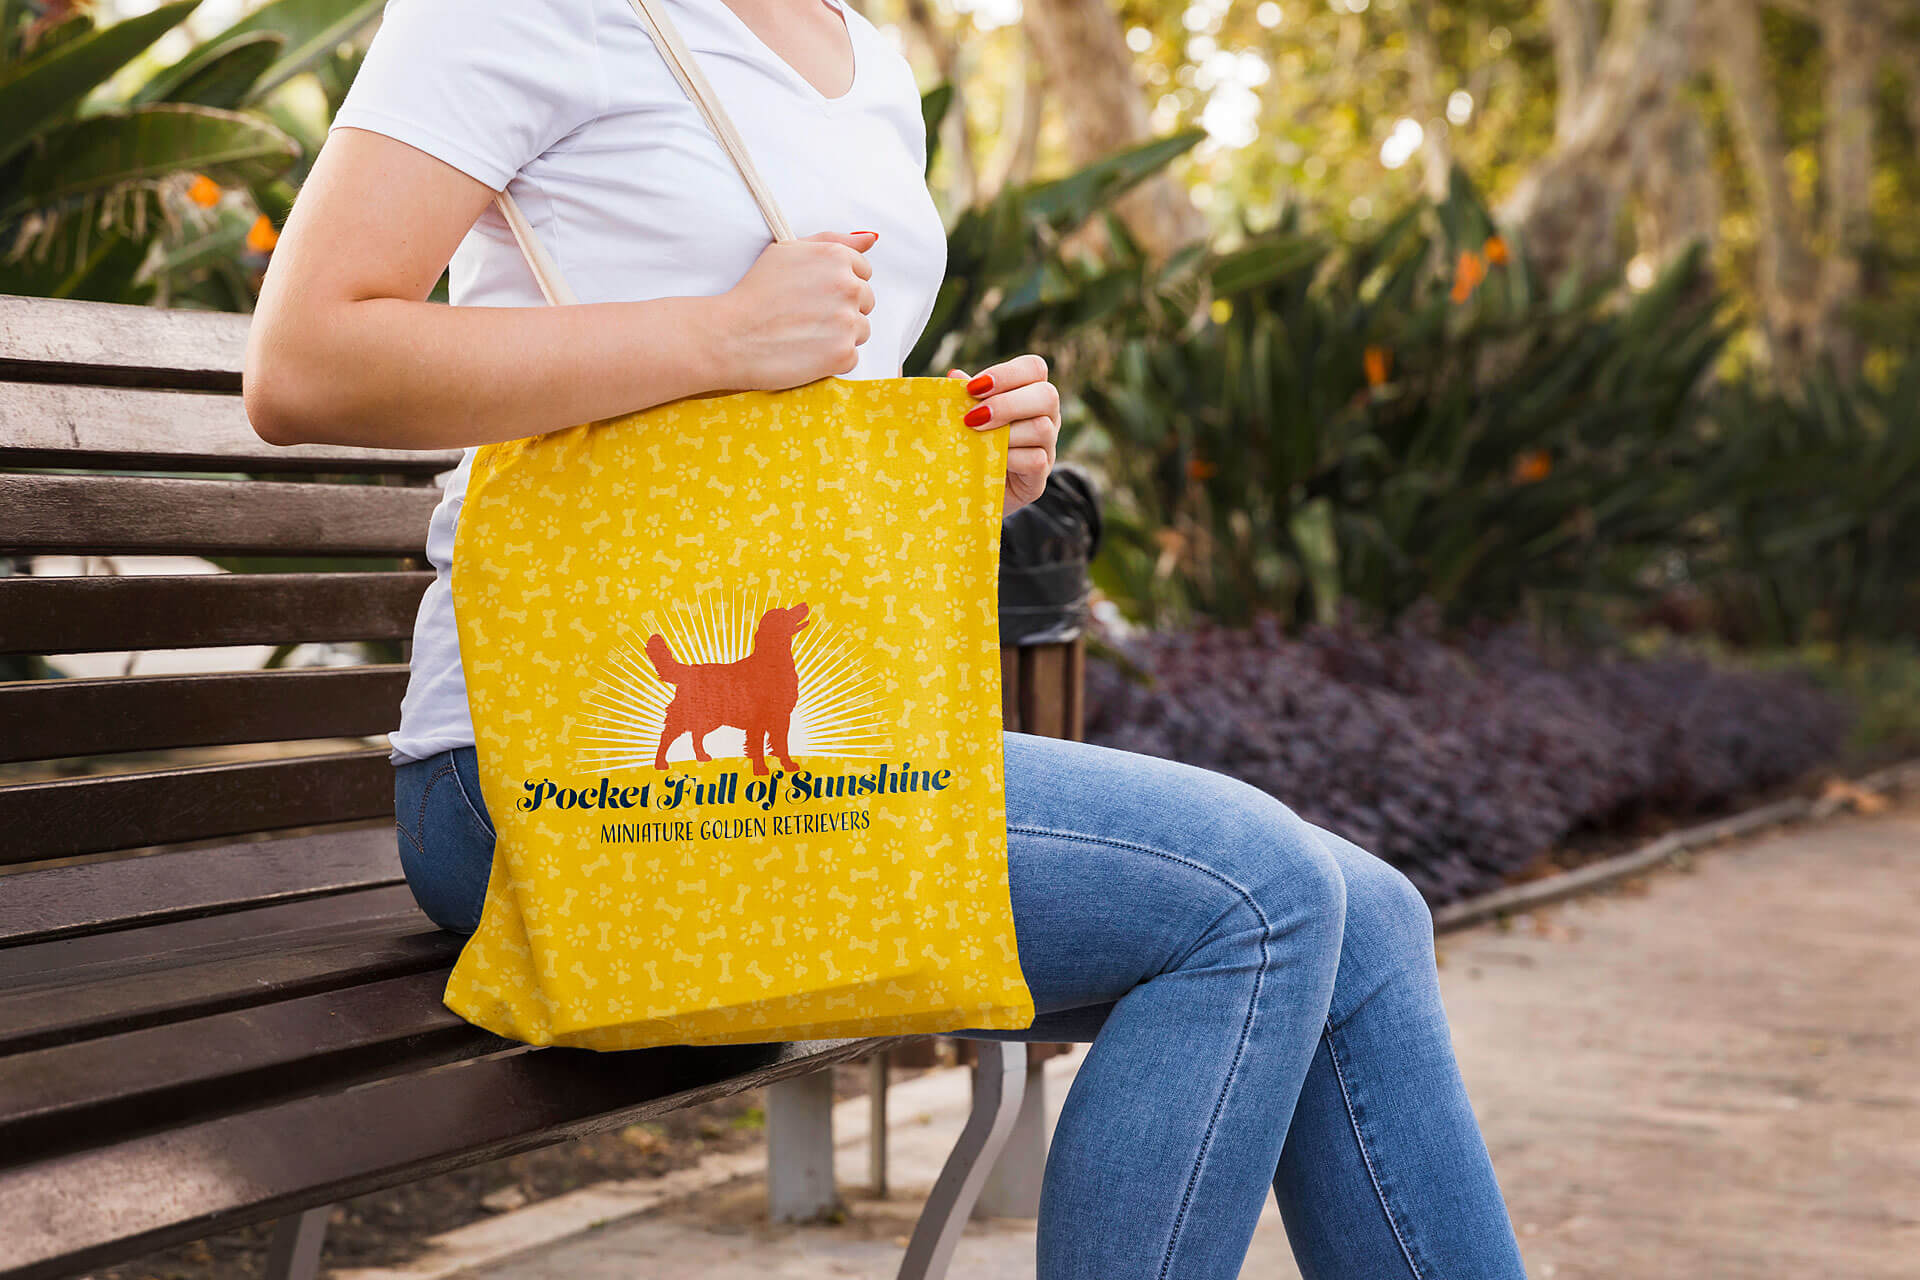 Pocket Full of Sunshine Miniature Golden Retrievers Woman Tote Bag Brand Logo Design